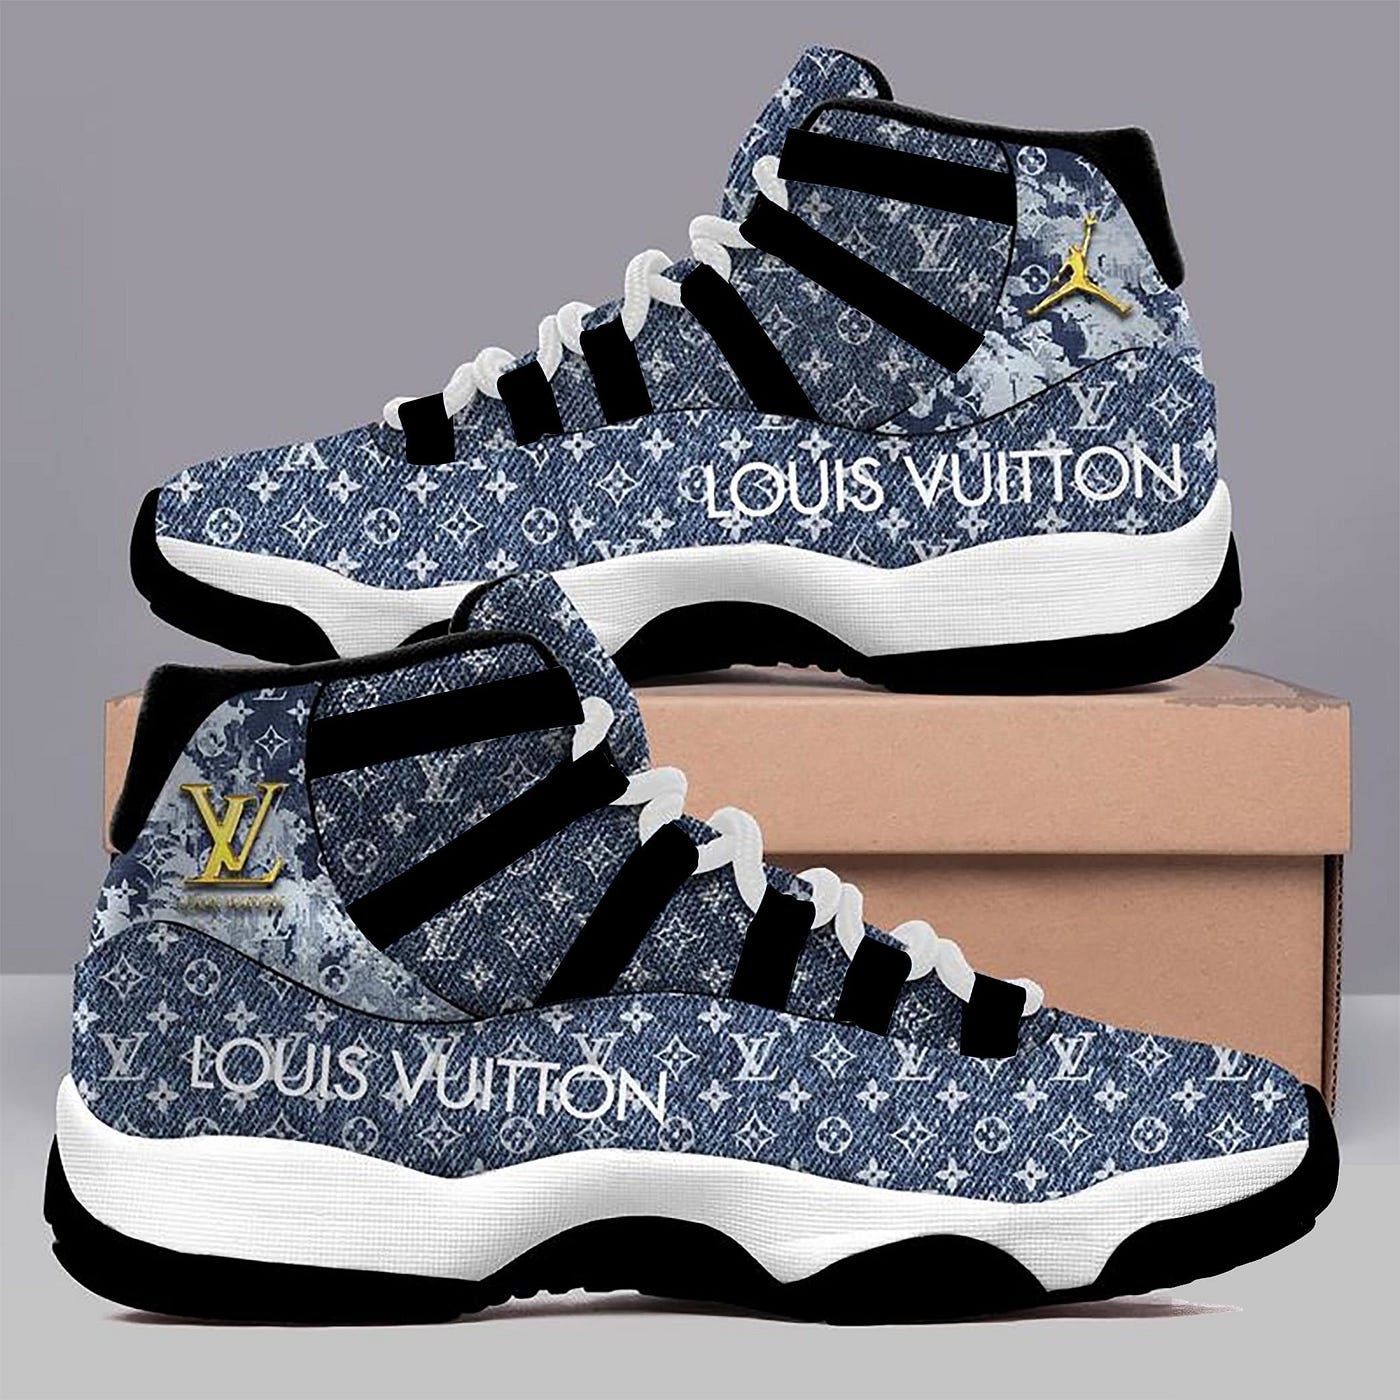 Louis Vuitton LV Monogram White Nike Air Jordan 1 Shoes Sneakers